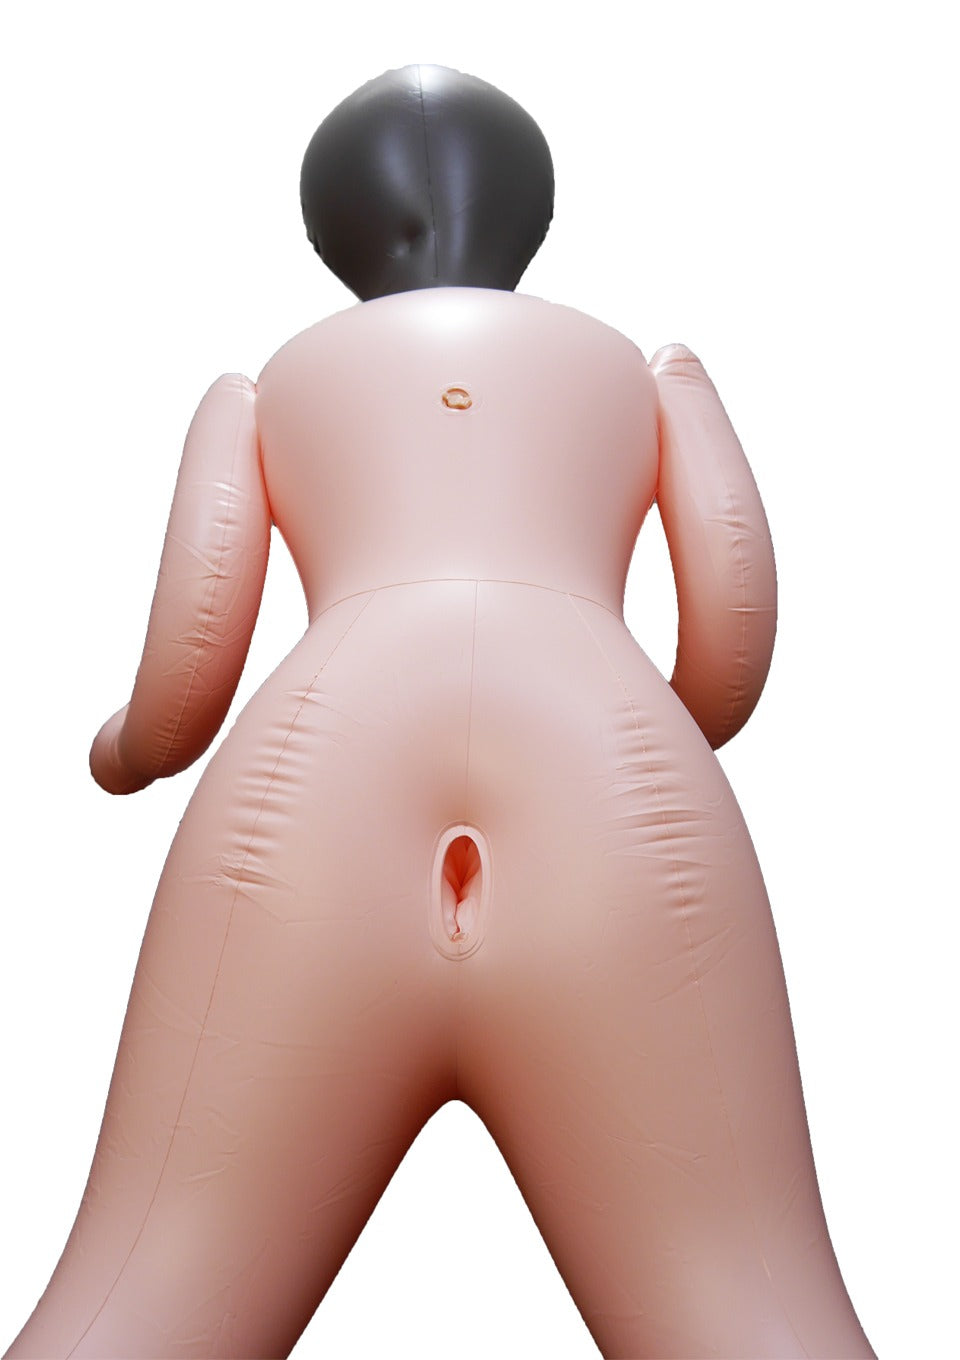 Bossoftoys - Monika love doll - 150 cm - Blowup doll - Triple holes - Masturbator - Inflatable doll - 26-00011